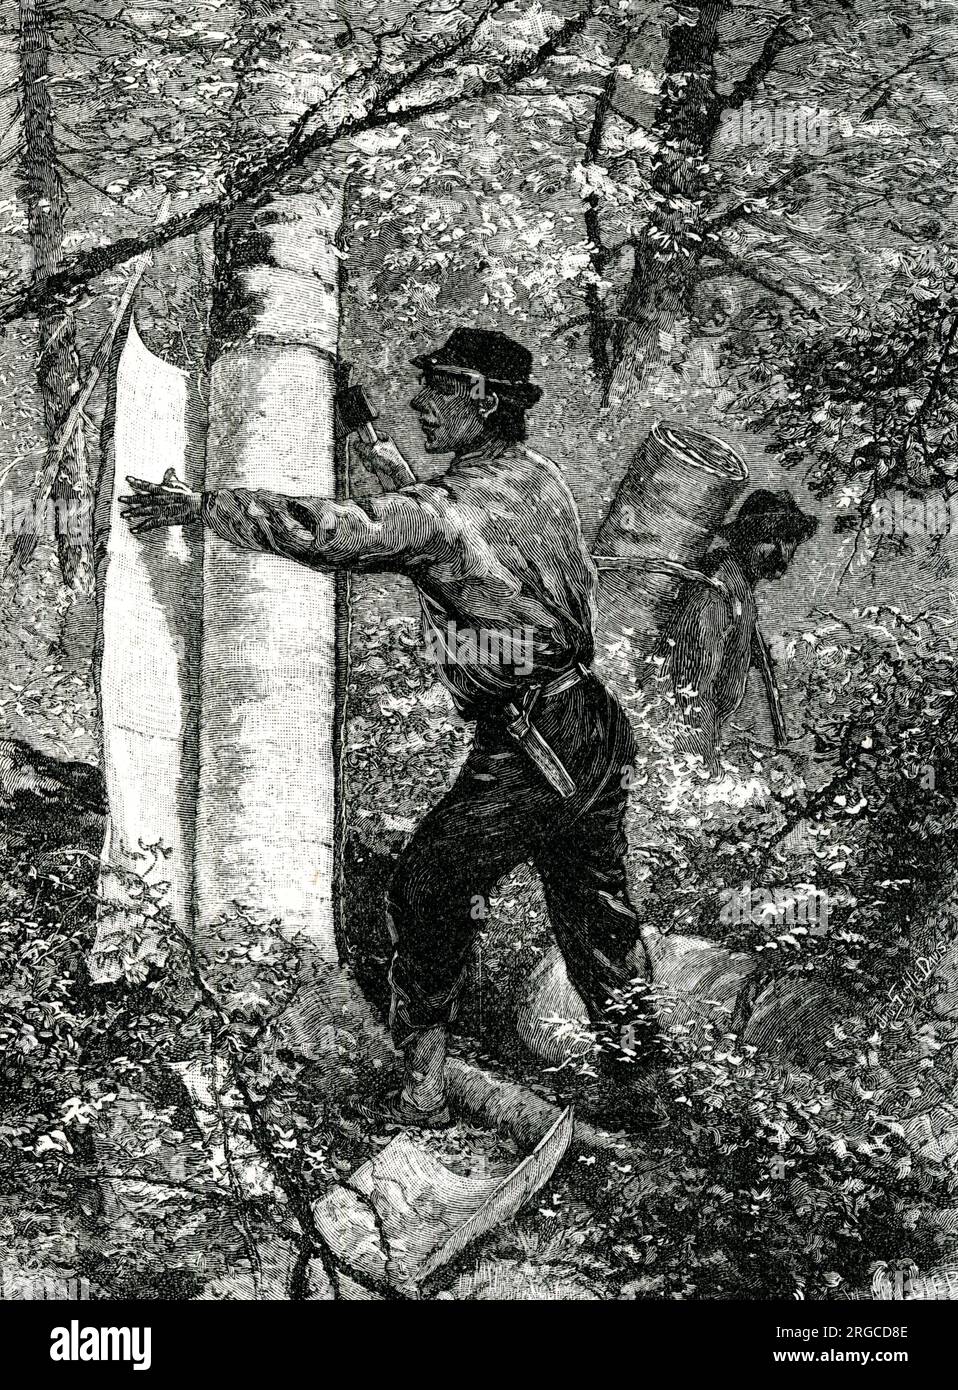 Native American taking tree bark for canoe making Stock Photo